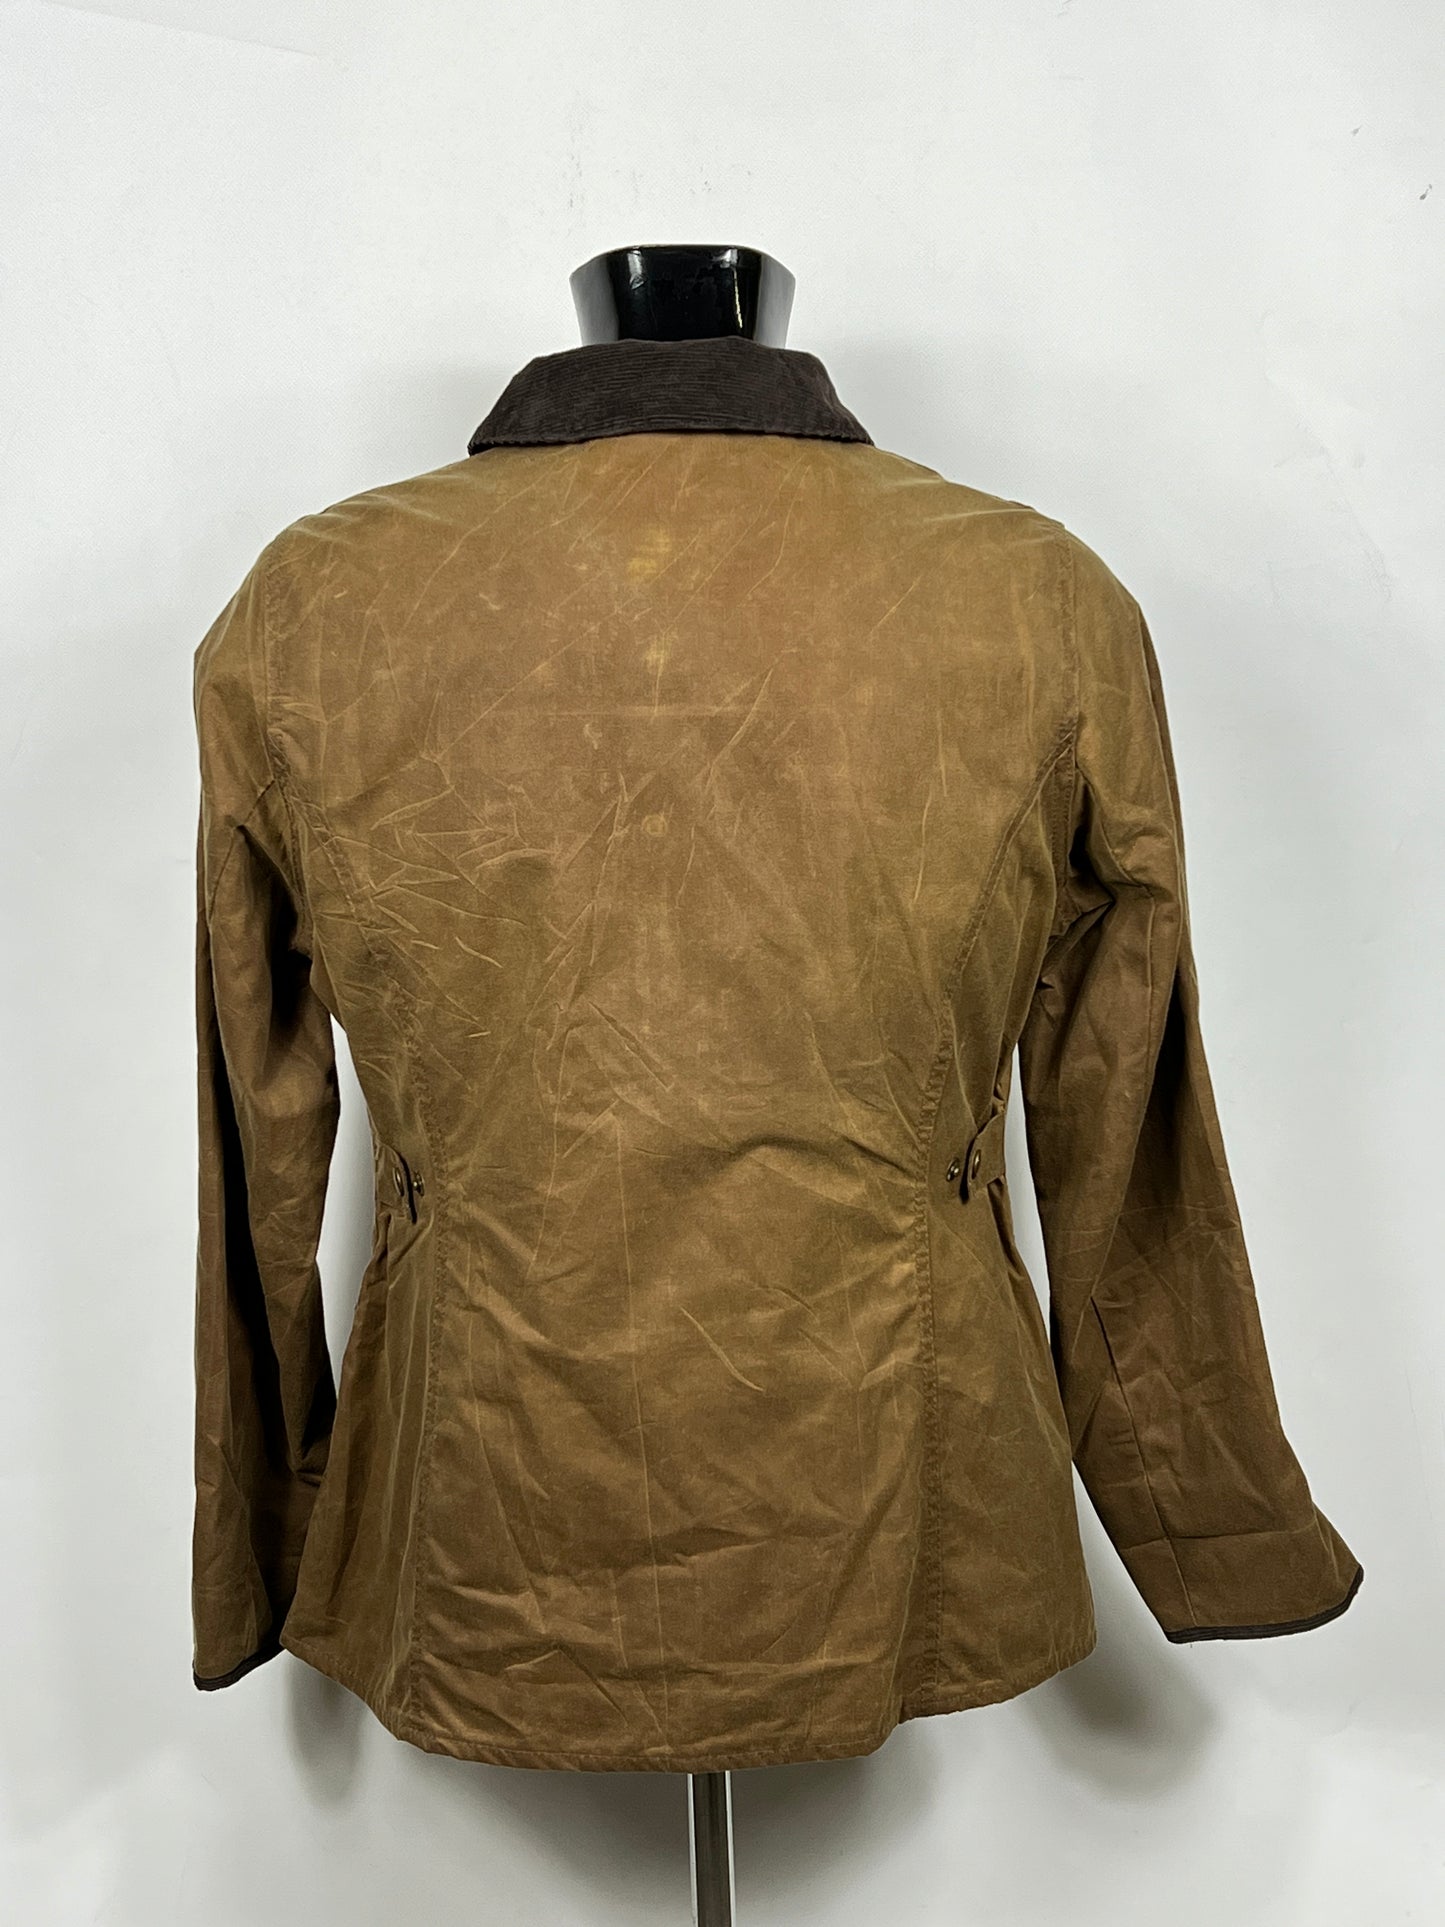 Giacca Barbour donna Beige corta UK14  Beige waxed lady jacket size Medium